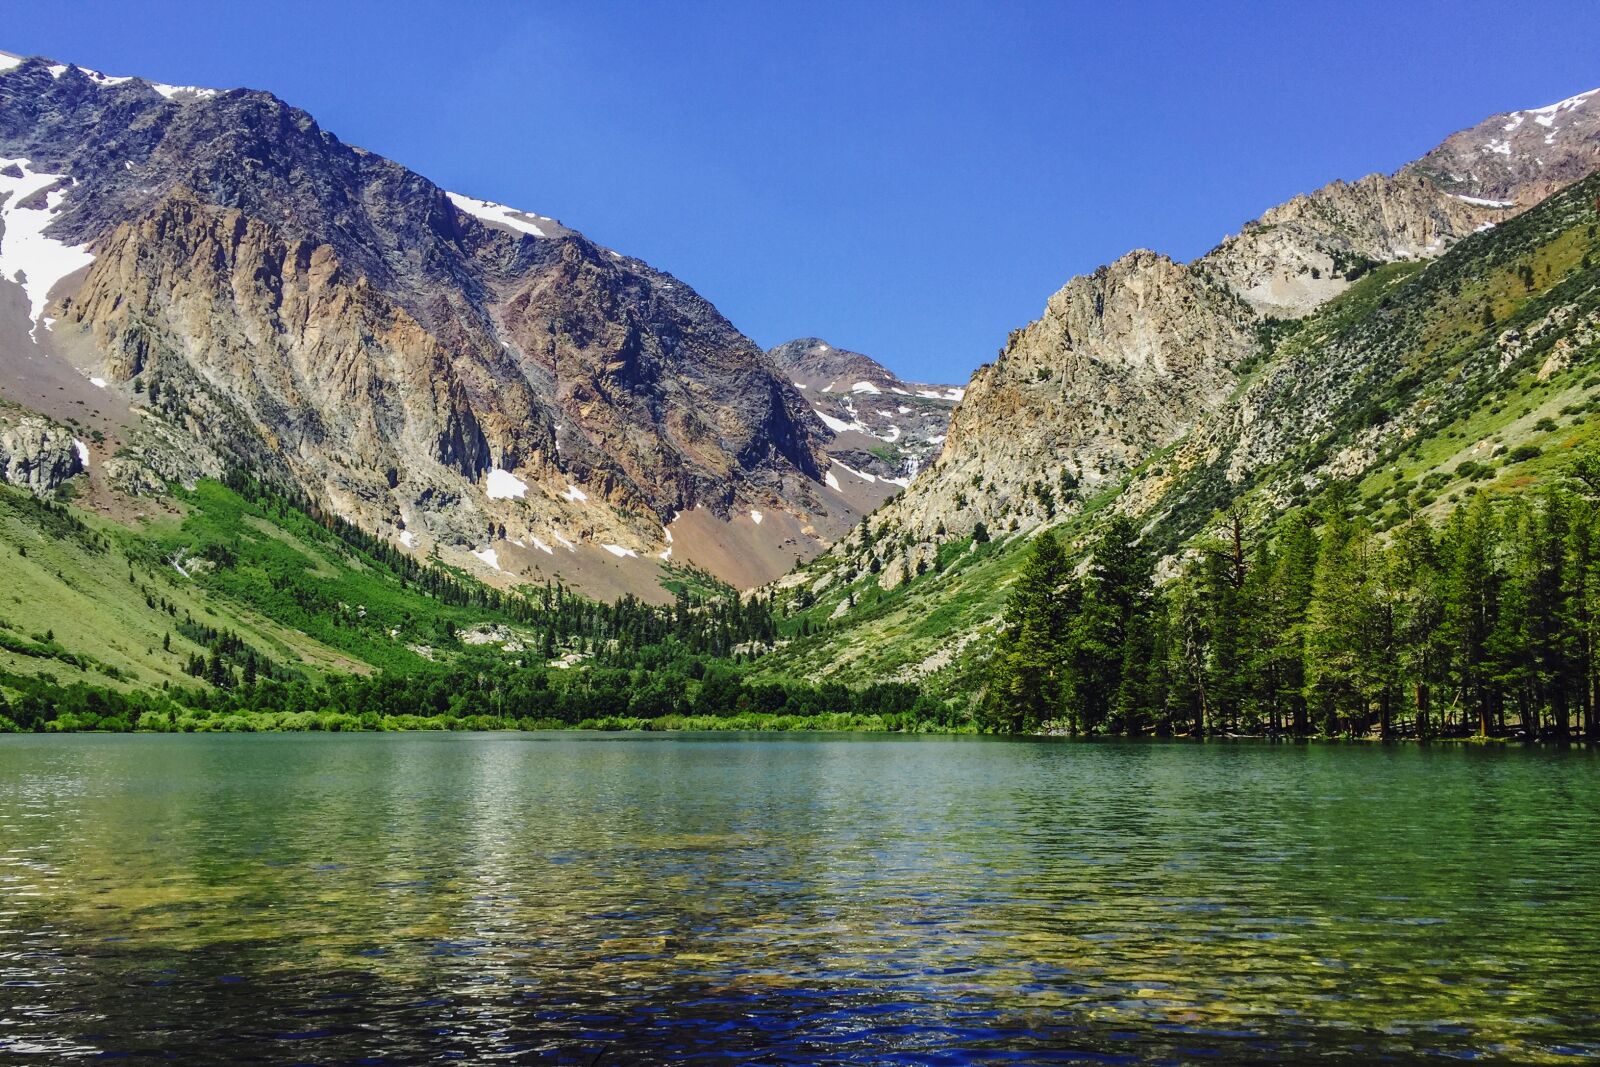 Apple iPhone 6 Plus sample photo. Lake, mountains, nature photography